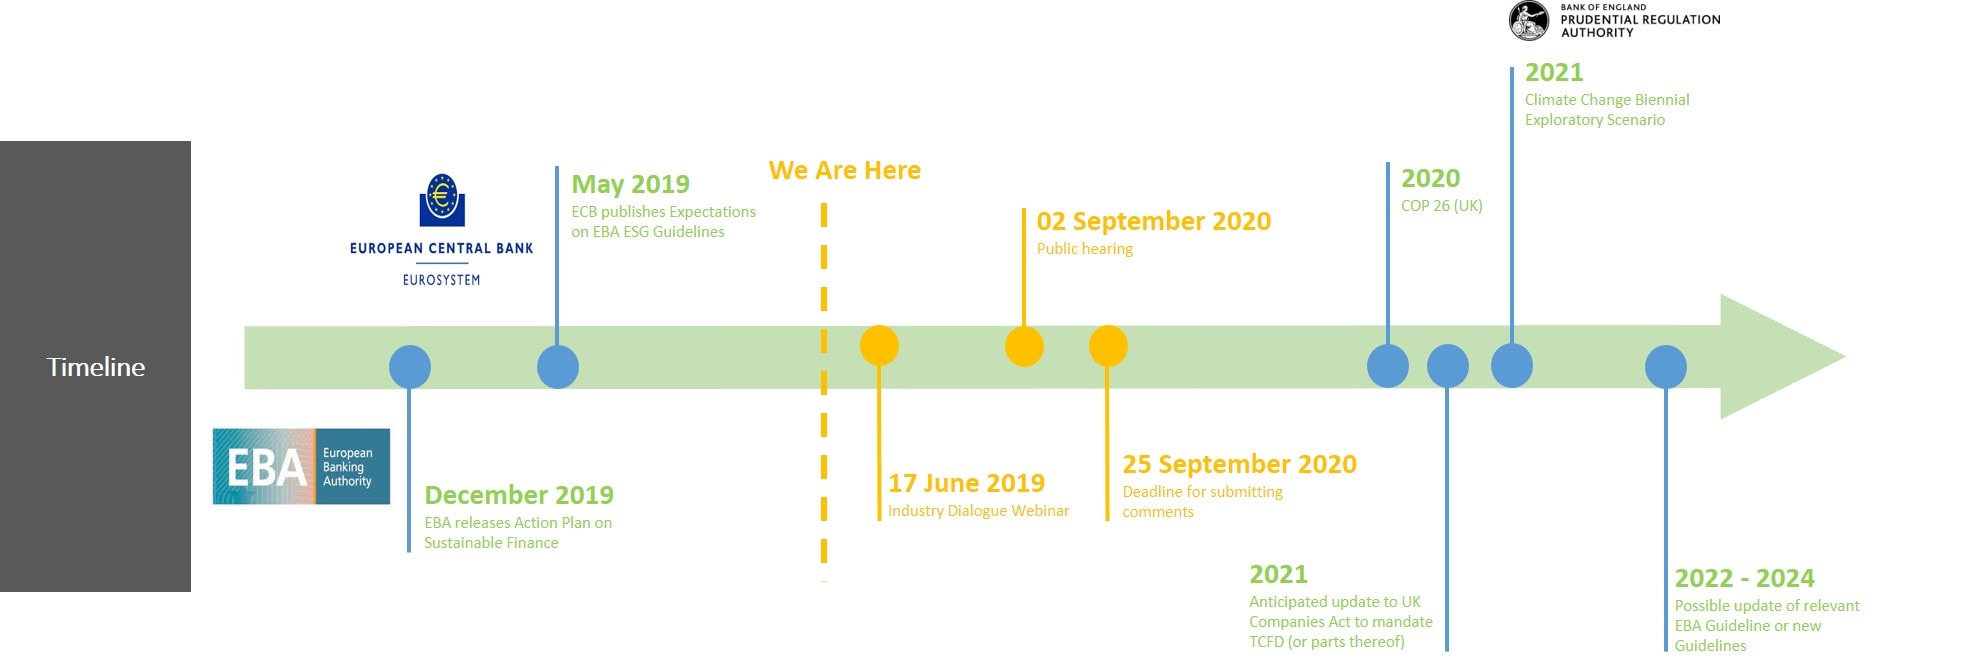 Figure 1: Timeline towards the effective date of publication